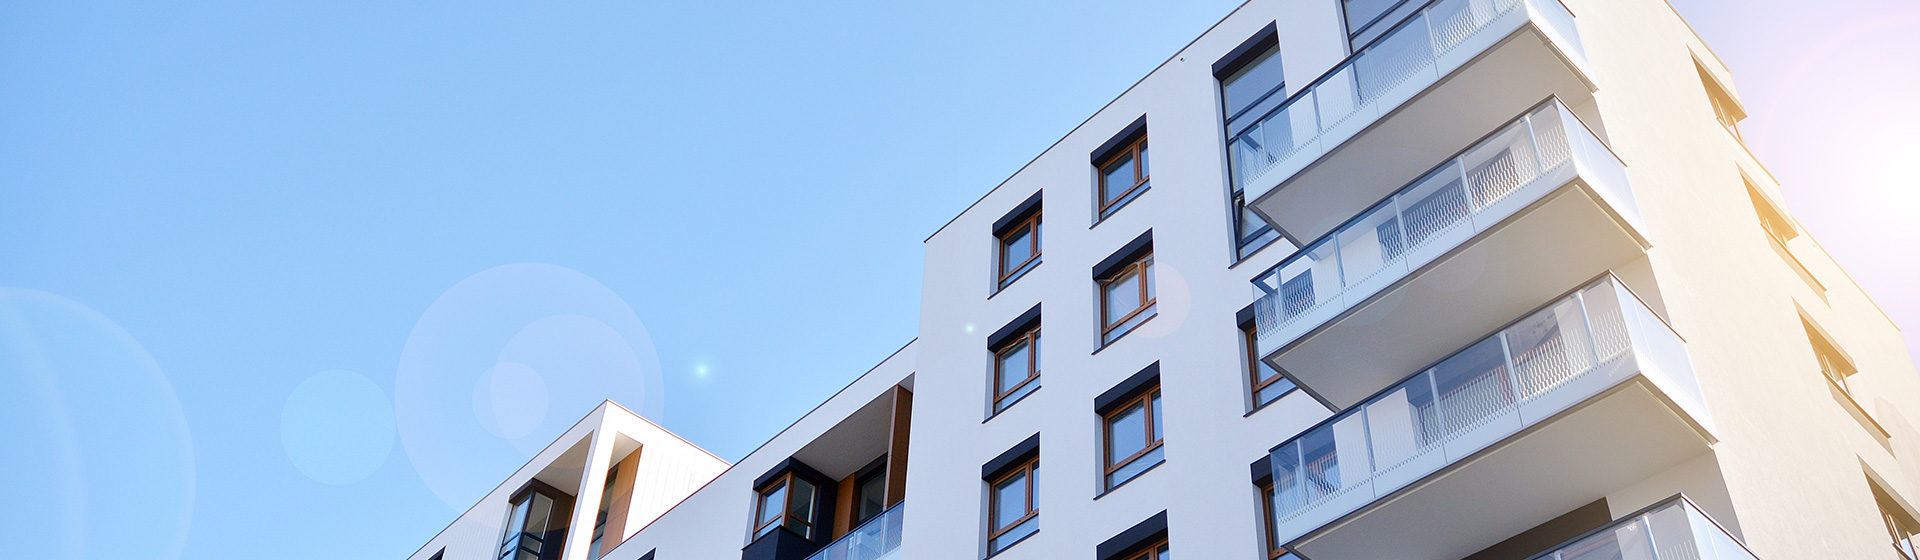 Moderne Mehrfamilienhäuser mit Balkonen unter blauem Himmel – &Uuml;ber uns inveni consulting